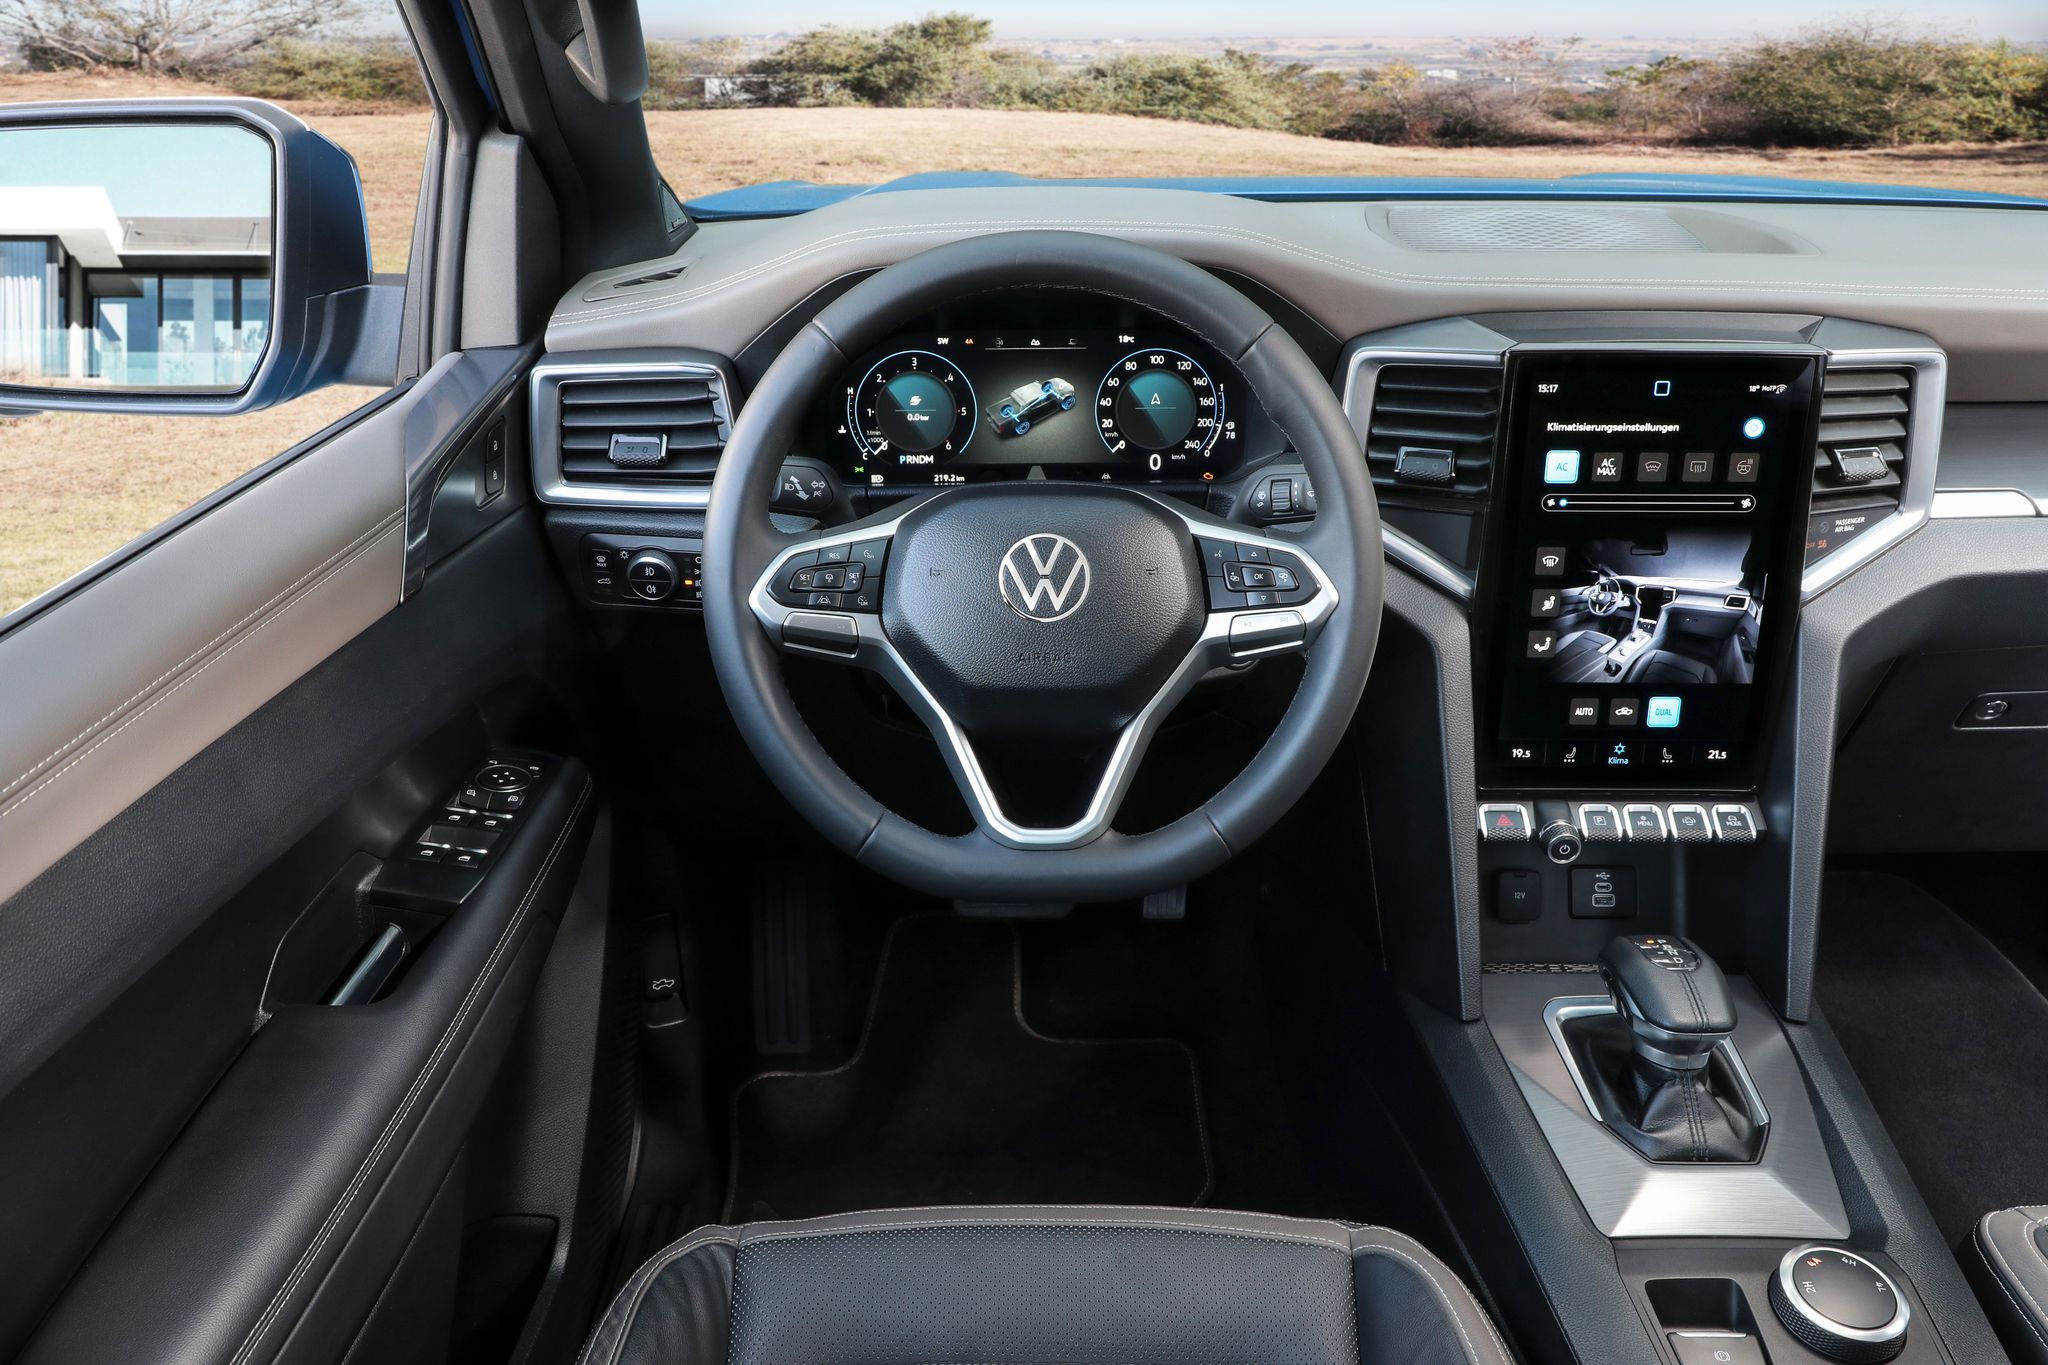 Volkswagen Amarok Mid-Size Pickup Not For U.S.